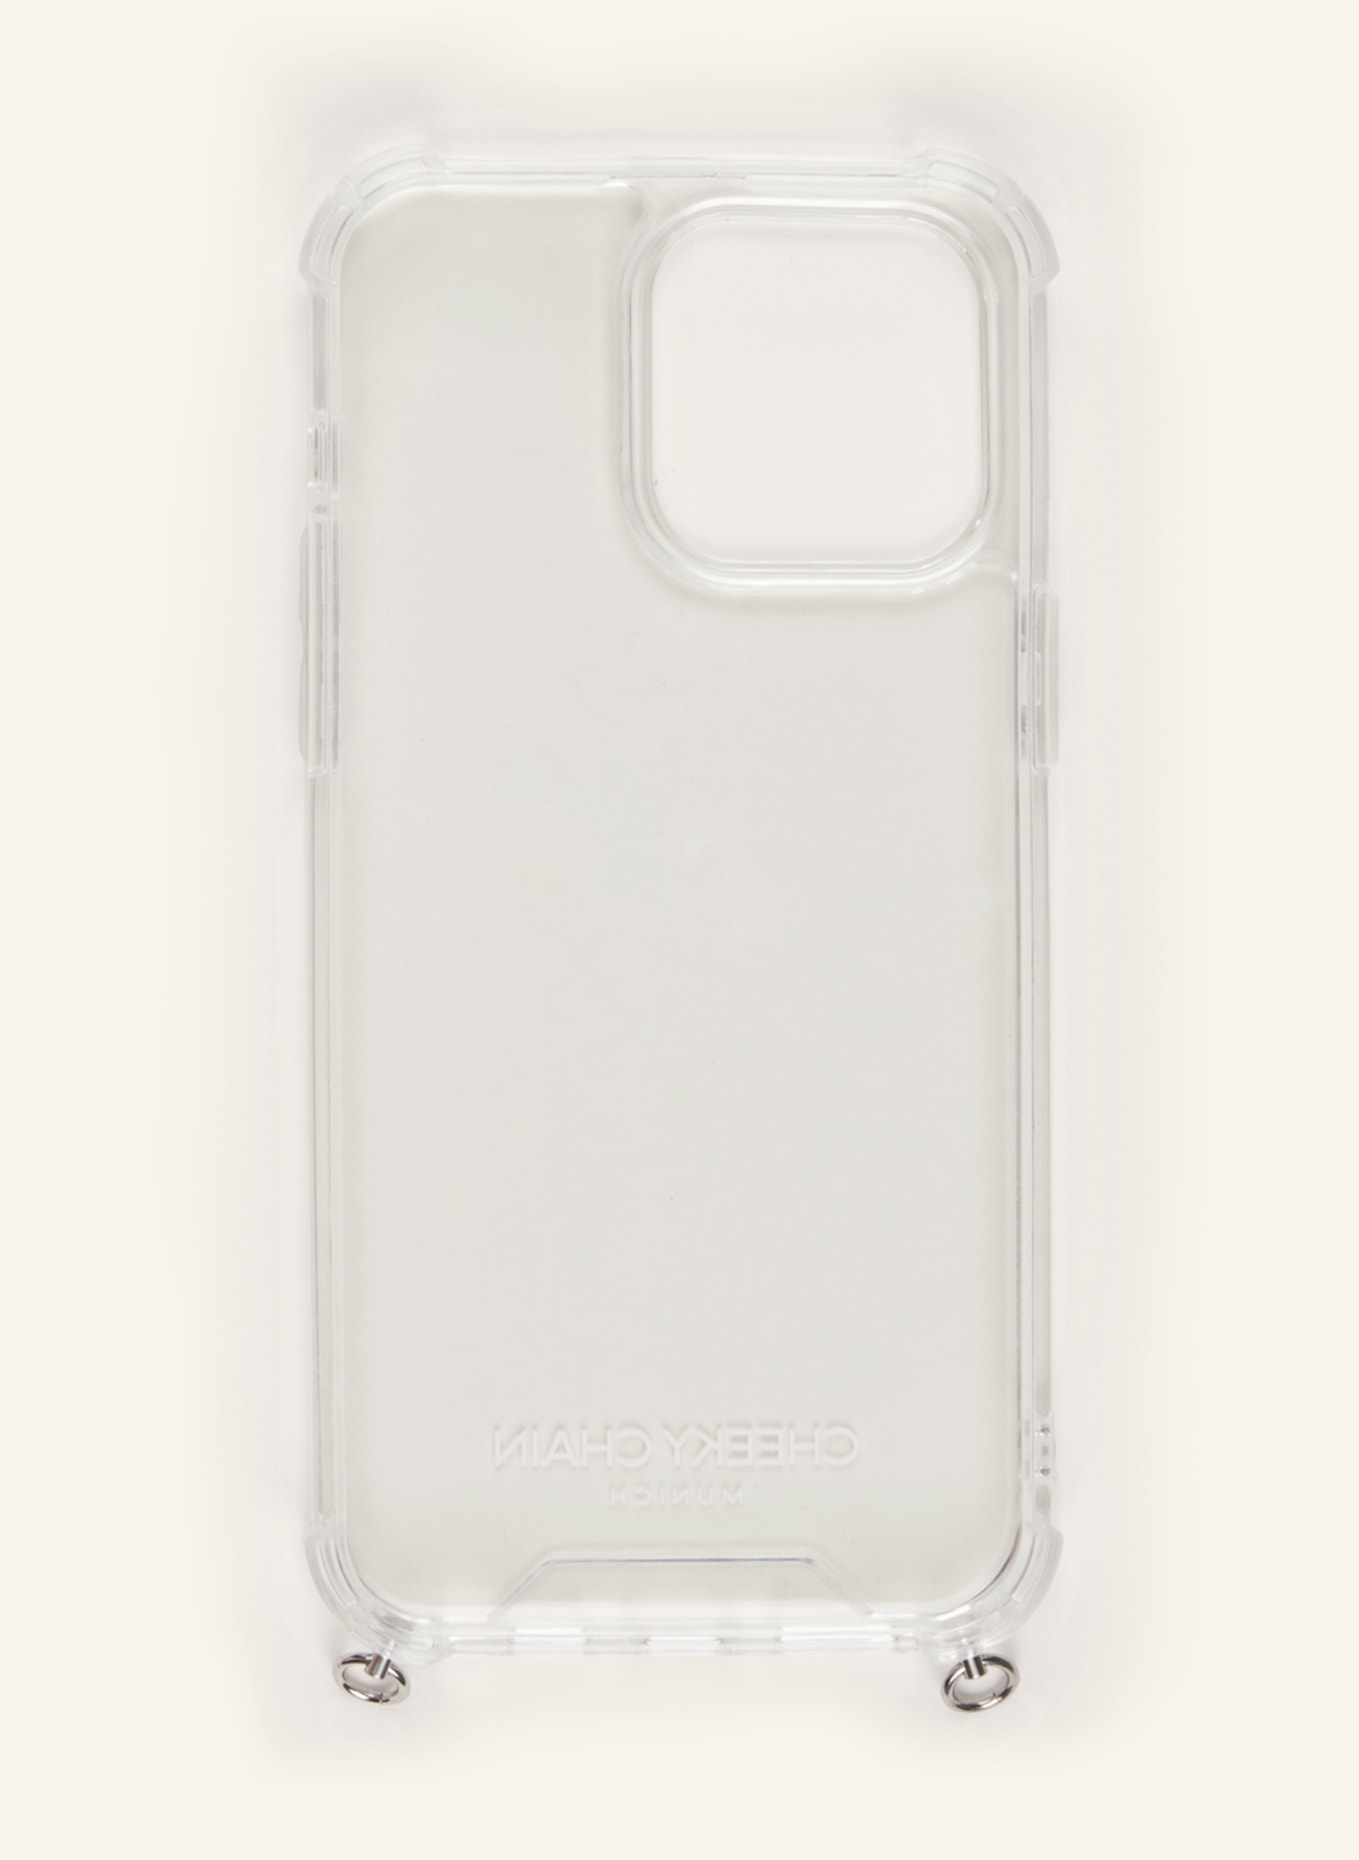 CHEEKY CHAIN MUNICH Smartphone-Hülle, Farbe: crystal clear silver (Bild 2)